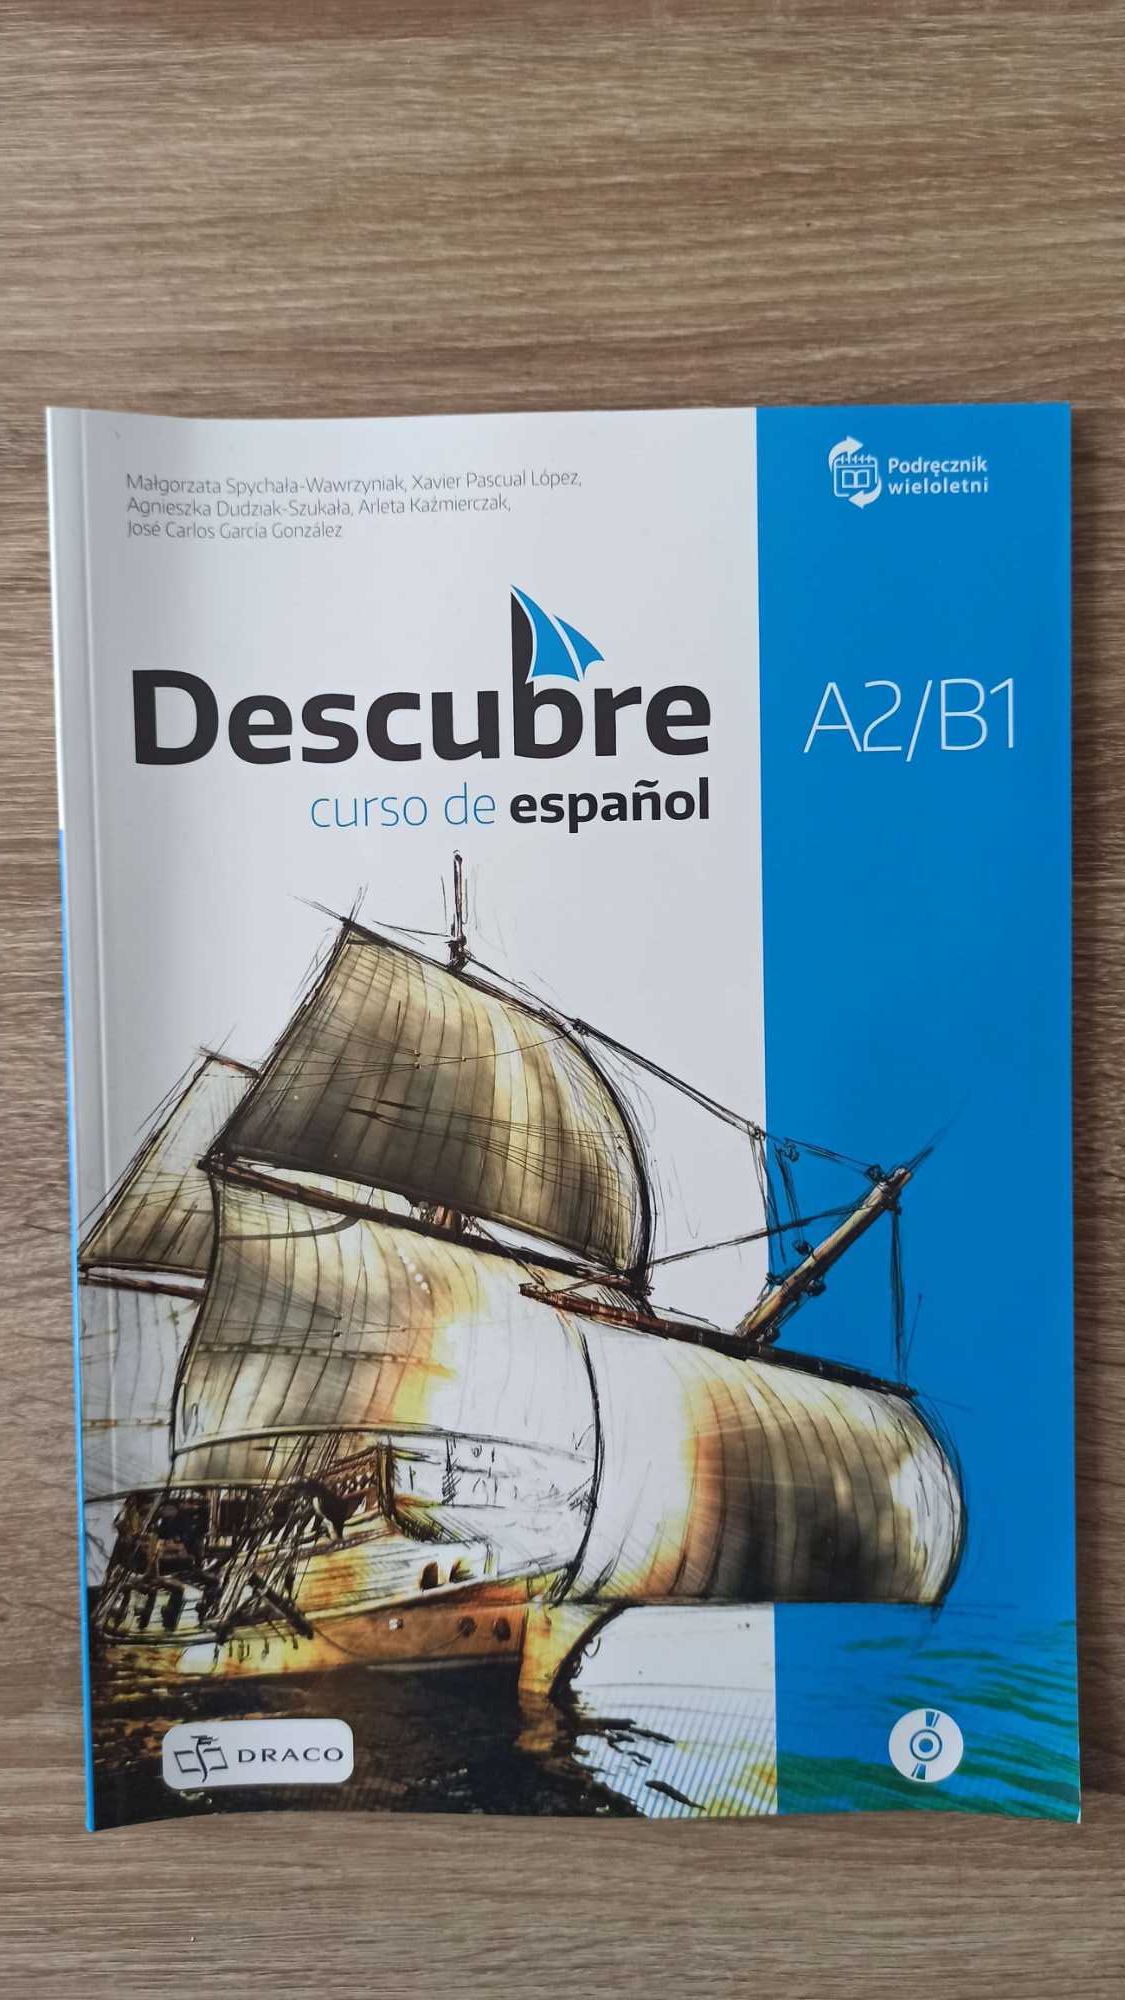 Podręcznik Descubre A2/B1, J. Hiszpański Liceum i Technikum